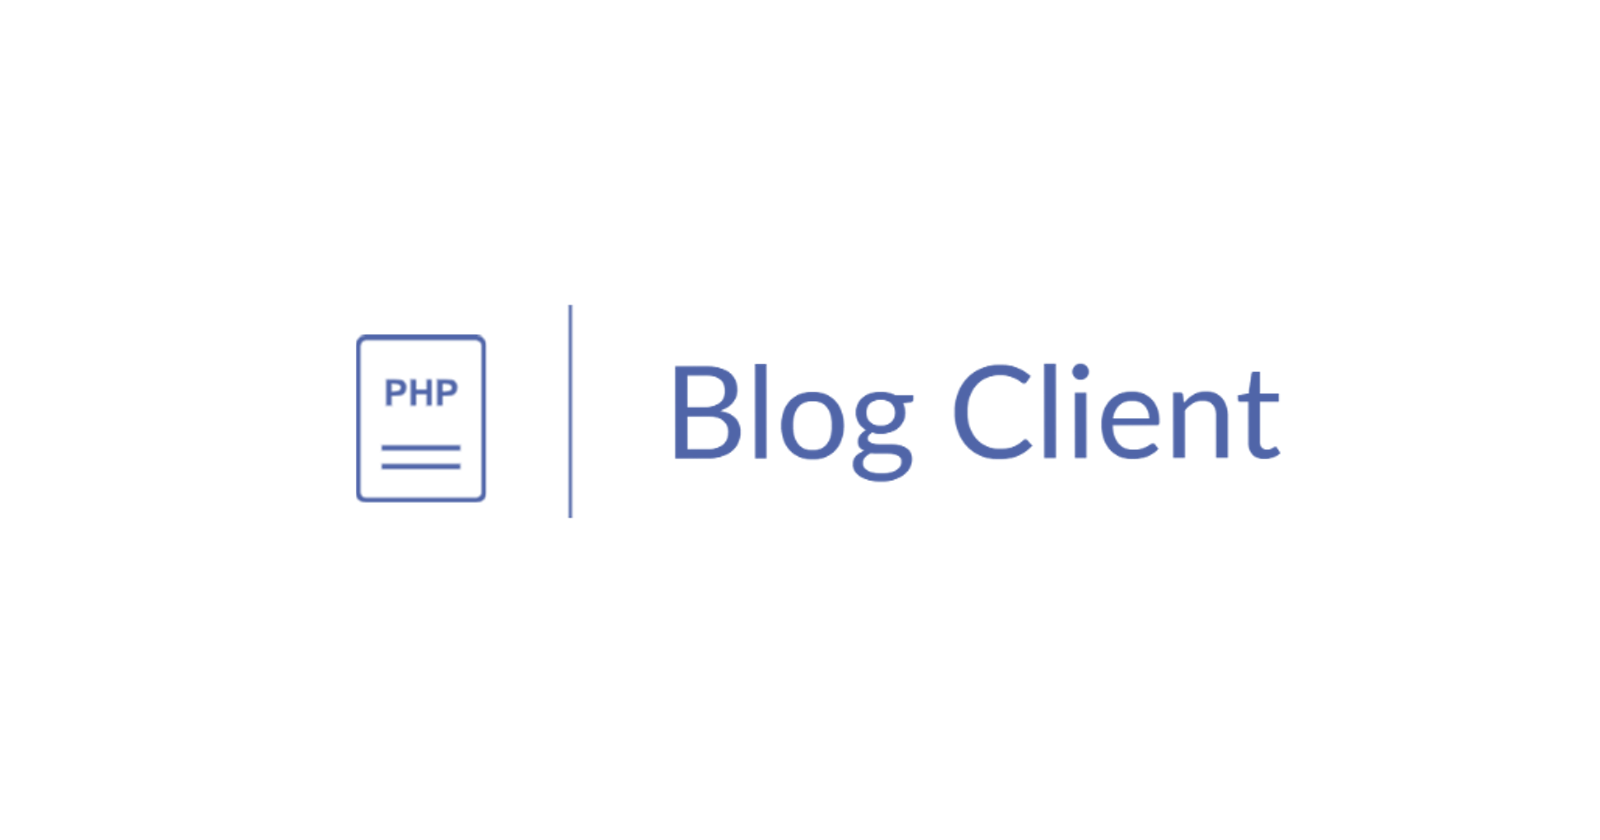 Get recent blog posts from popular blogging platforms with PHP